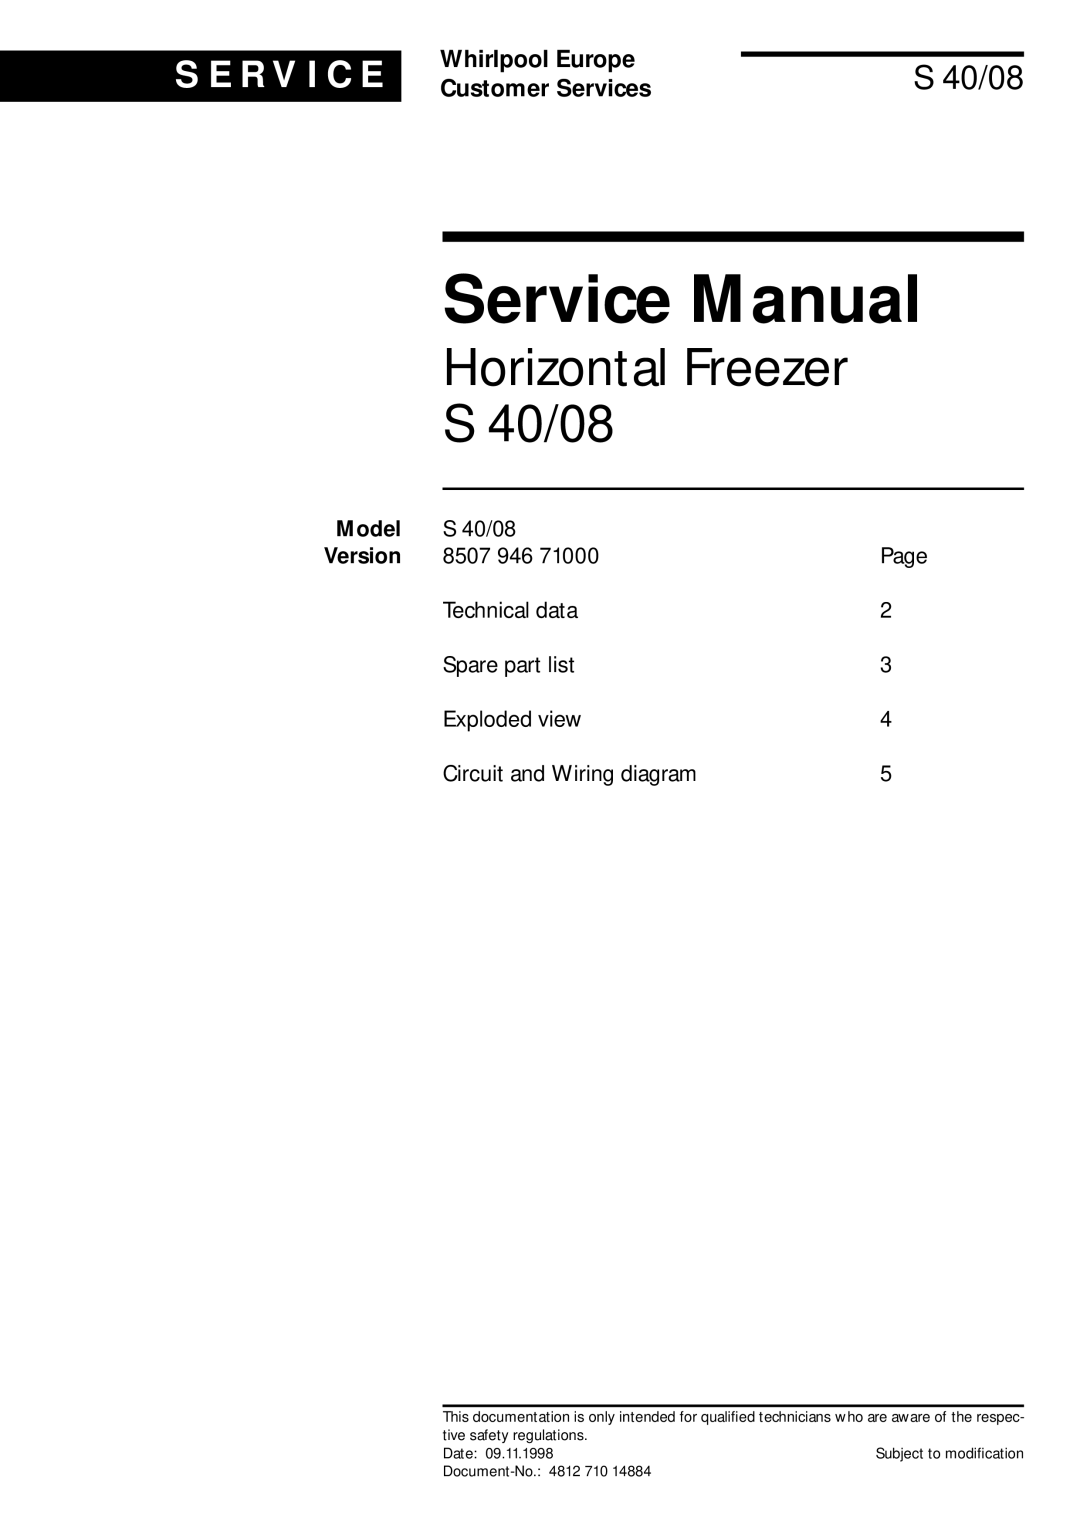 Whirlpool S 40 8, SO service manual Model, Horizontal Freezer S 40/08, S E R V I C E, Whirlpool Europe, Customer Services 